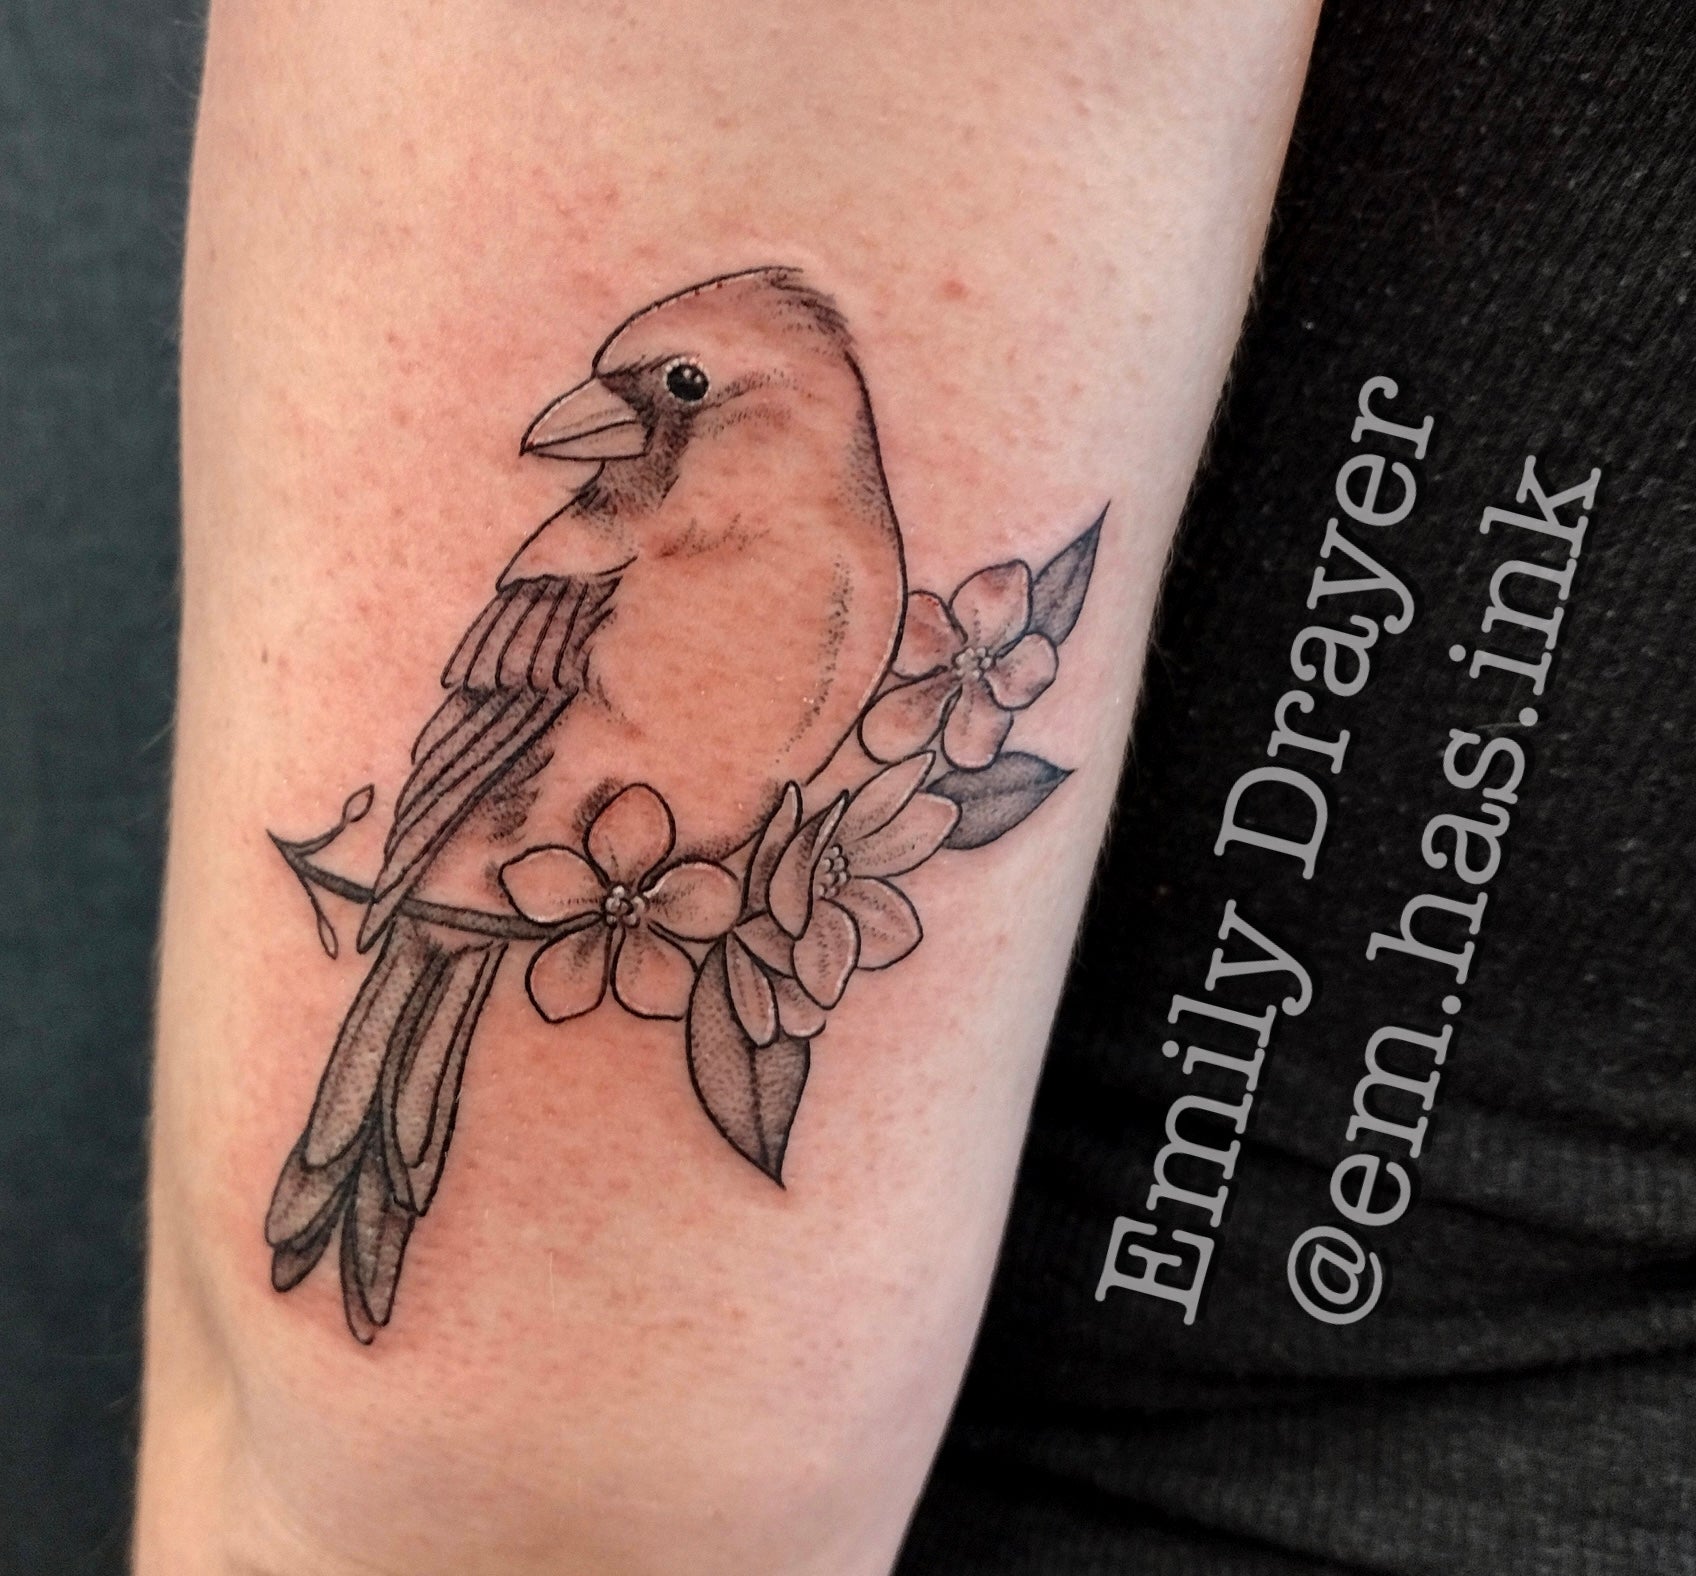 Bird Tattoo on Shoulder - Best Tattoo Ideas Gallery